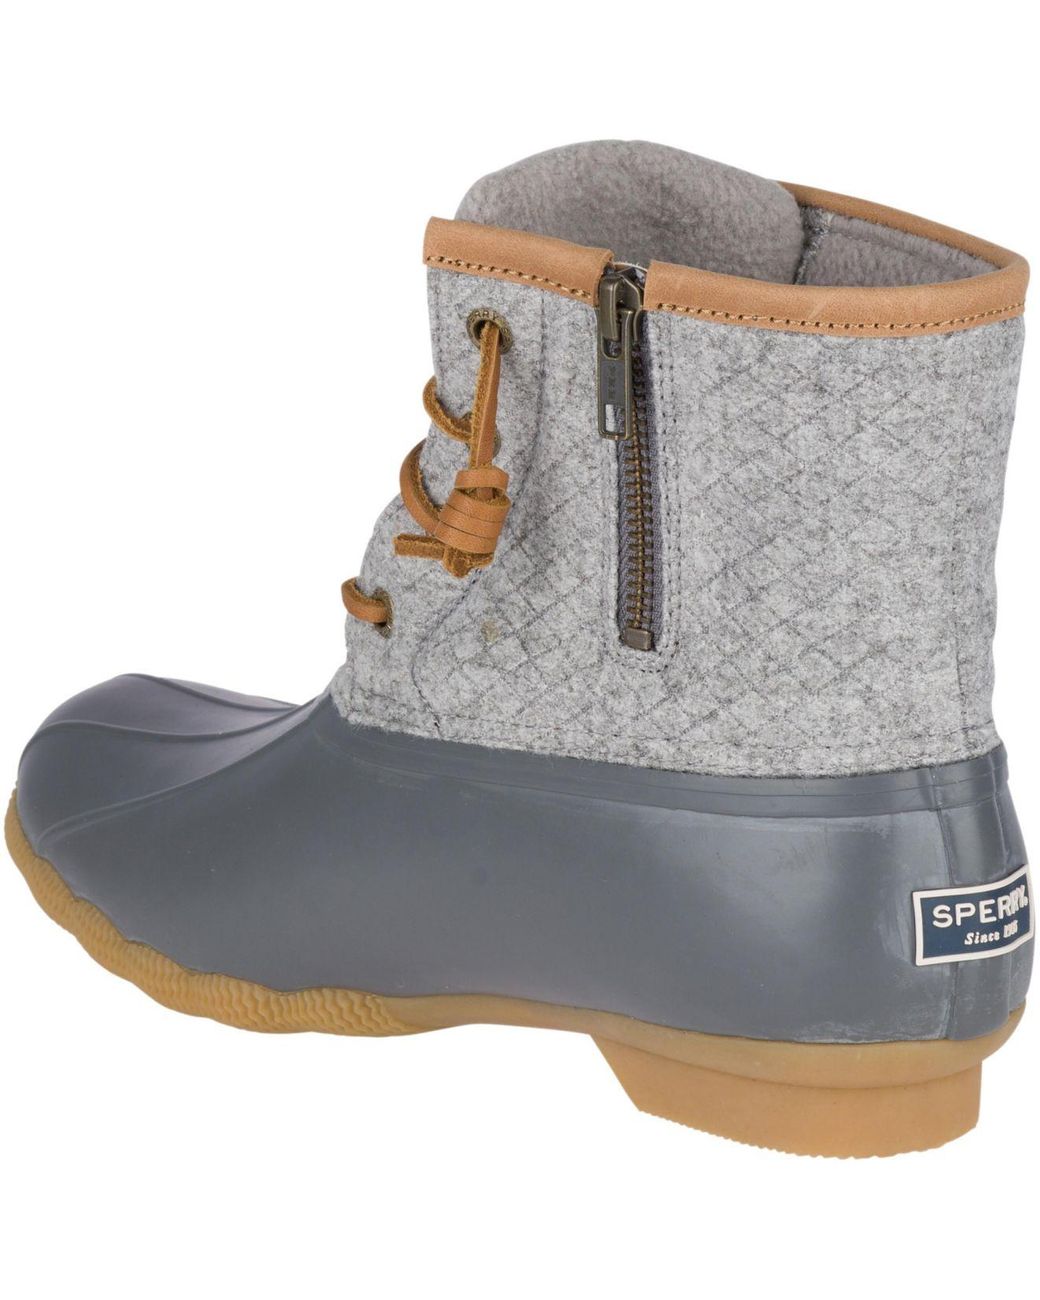 sperry saltwater emboss wool duck rain boots